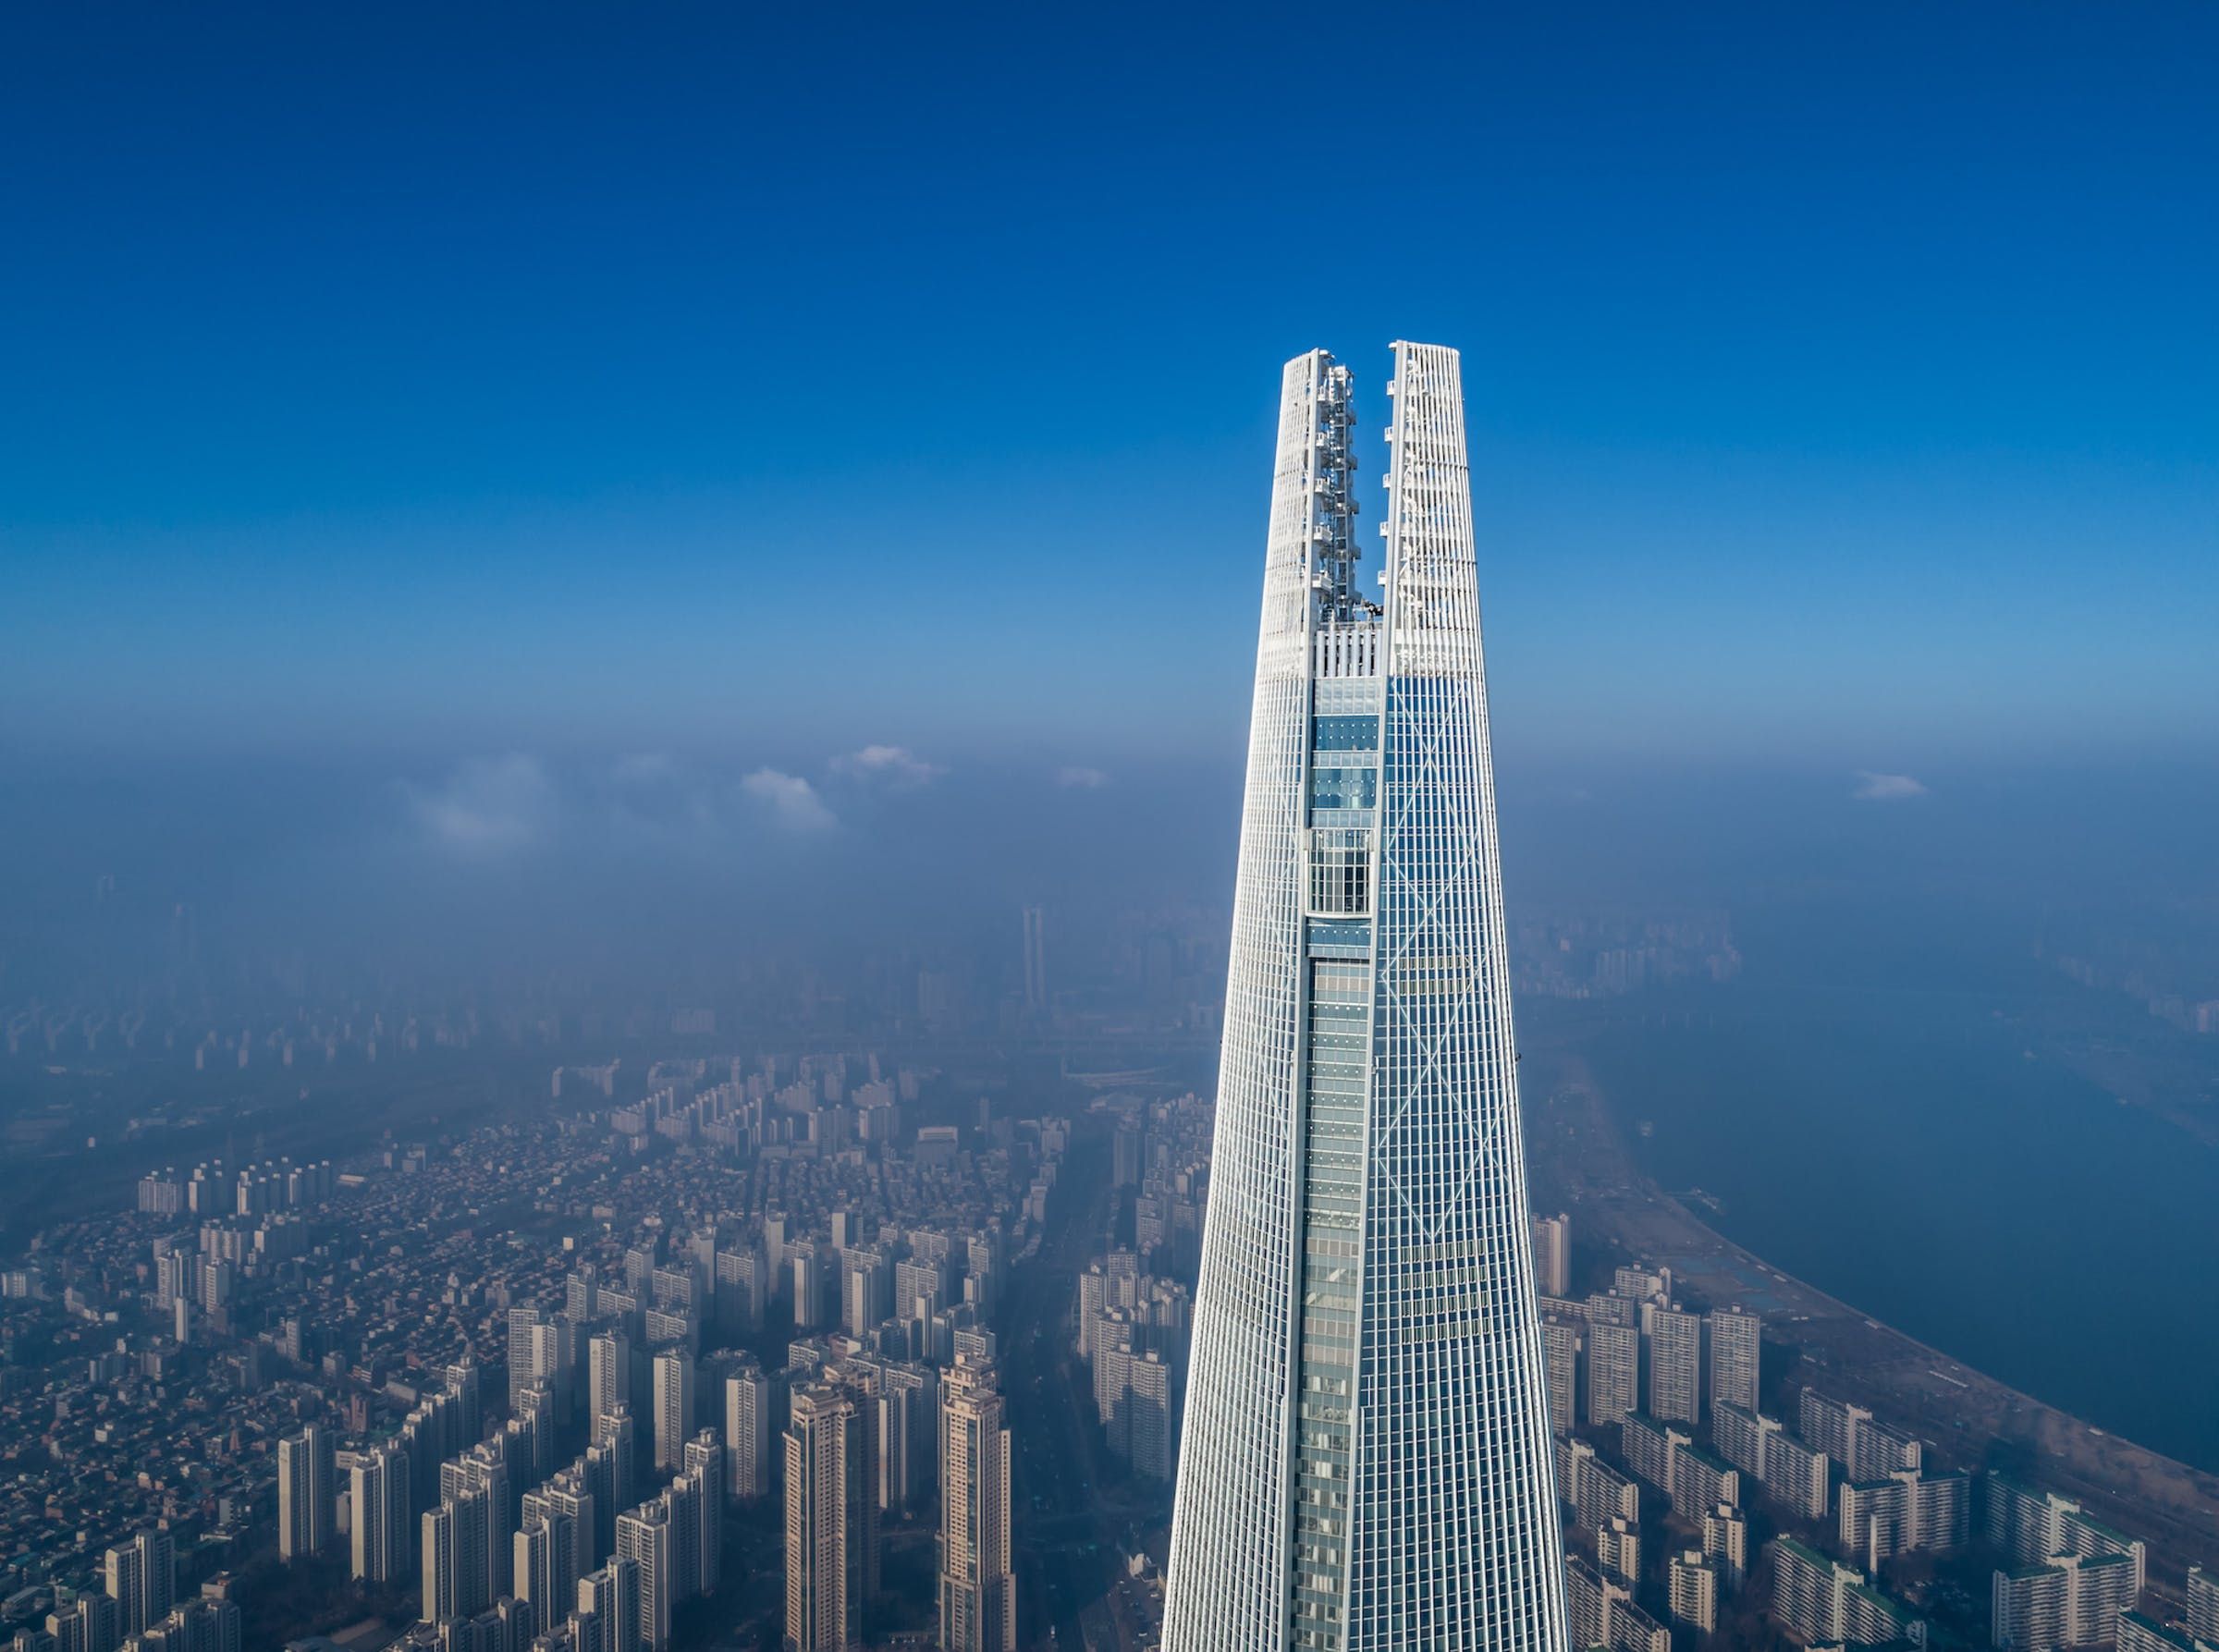 Kohn Pederson Fox Associates' Lotte World Tower in South Korea wins Emporis Skyscraper award. Lotte world, Skyscraper, Tower